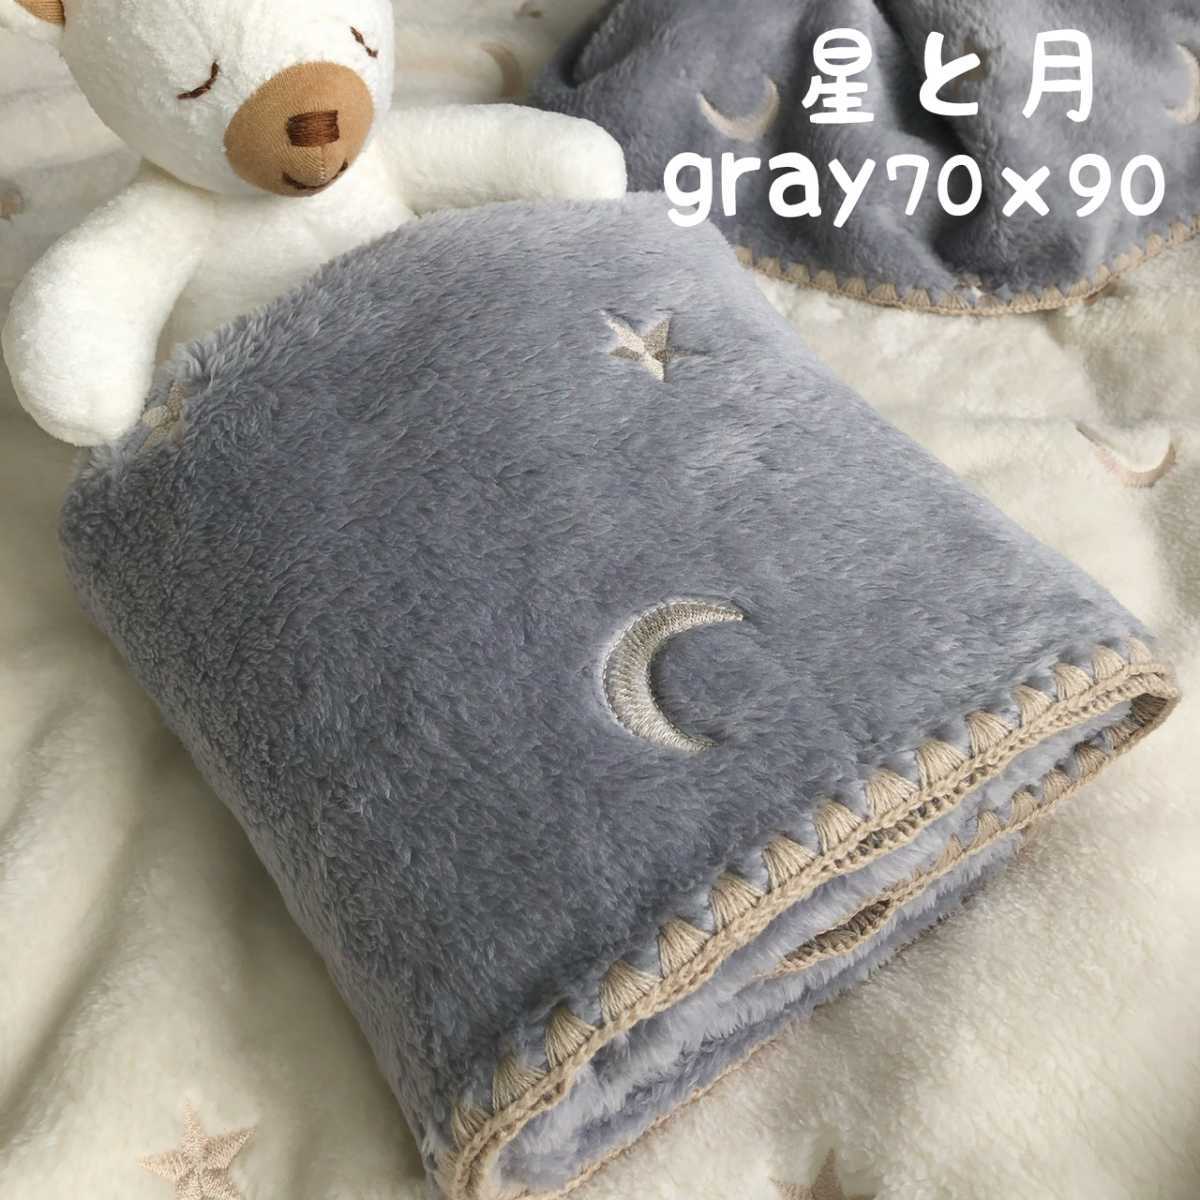  new goods star . month Gold embroidery baby Eve ru fur blanket Korea Eve ru gray 70×90cm